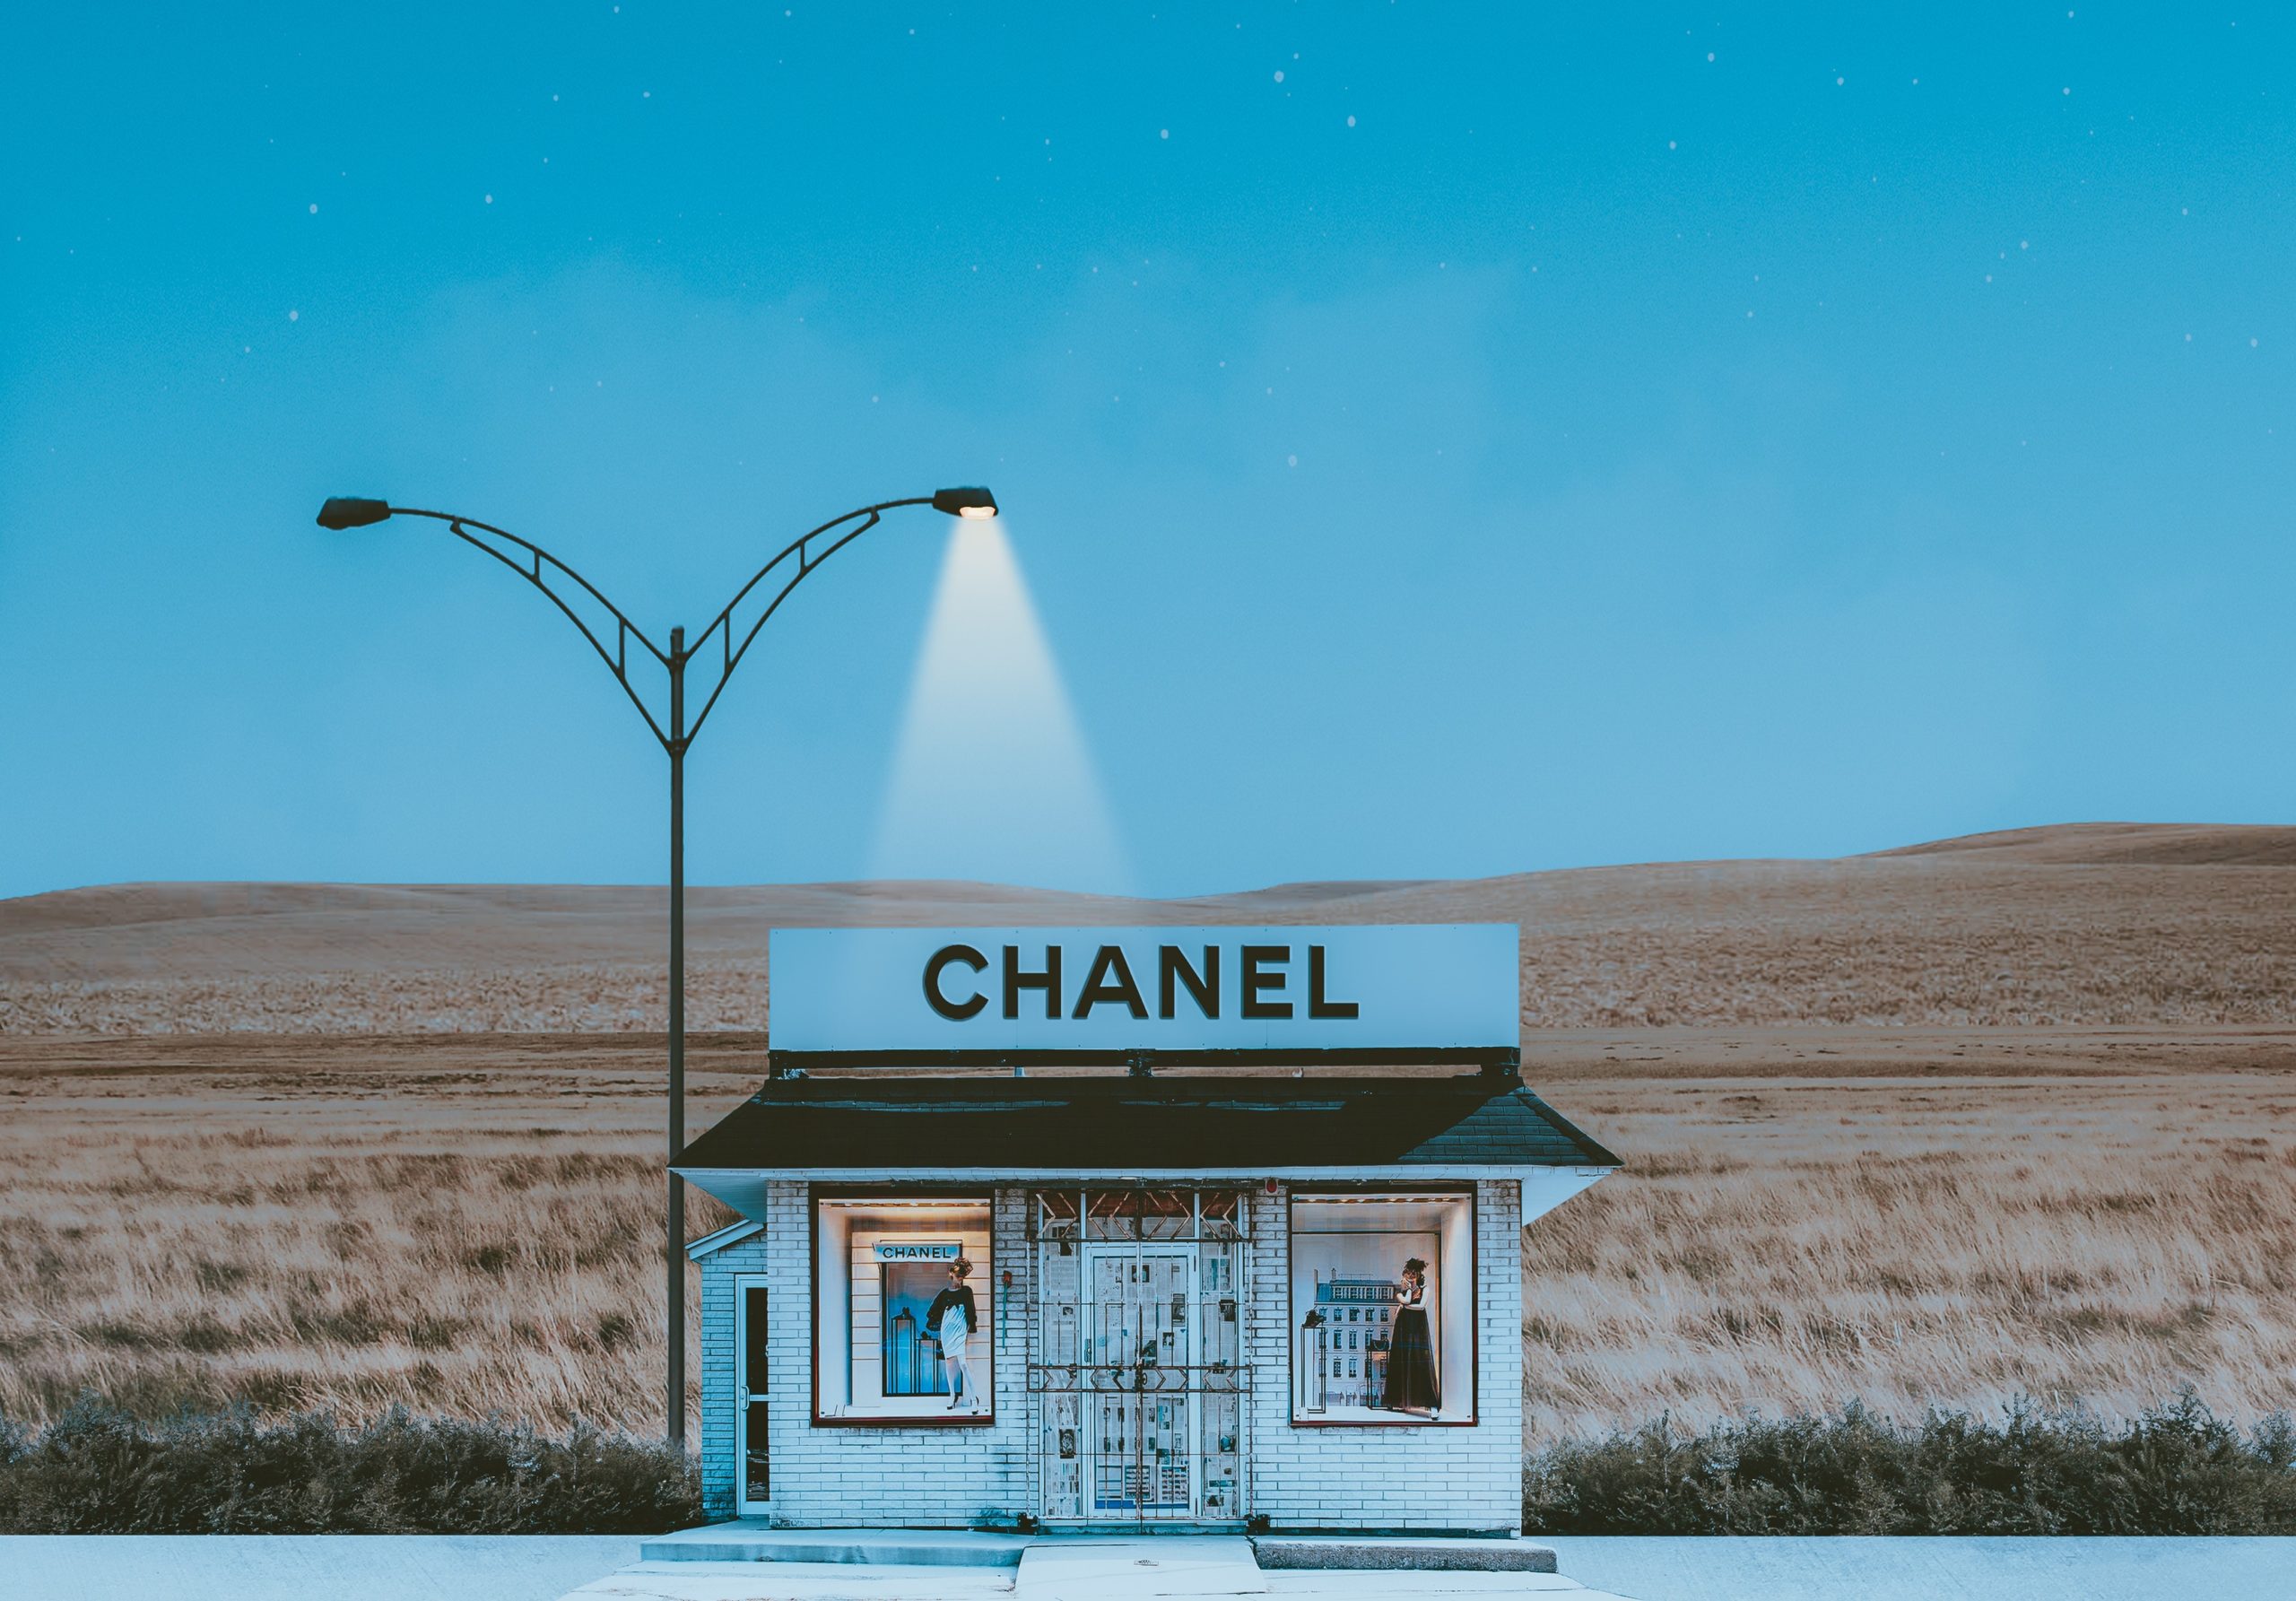 Chanel store facade under a streetlight